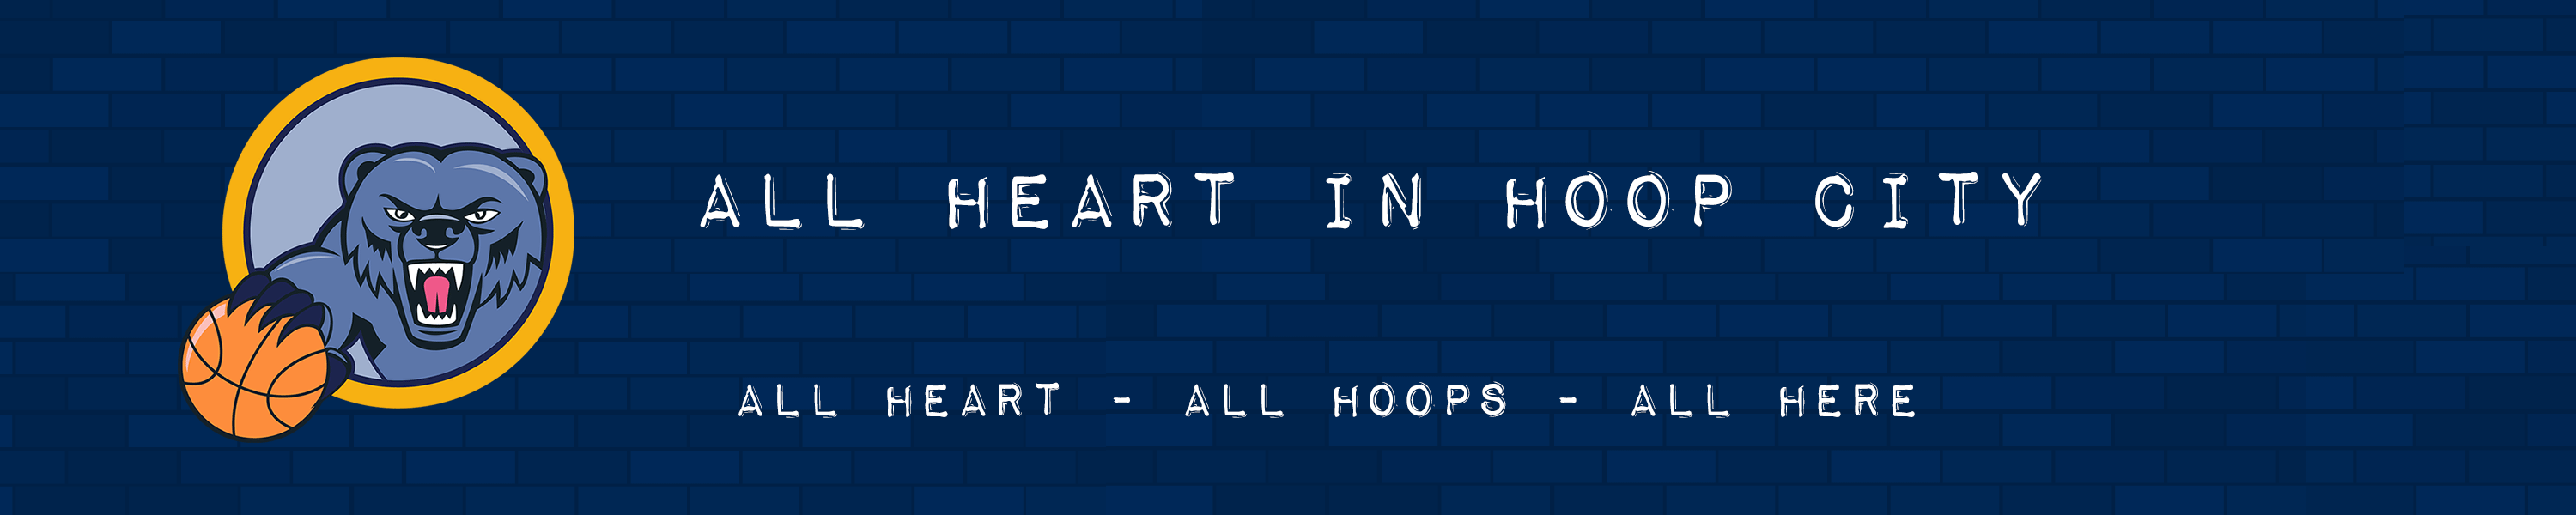 All Heart in Hoop City